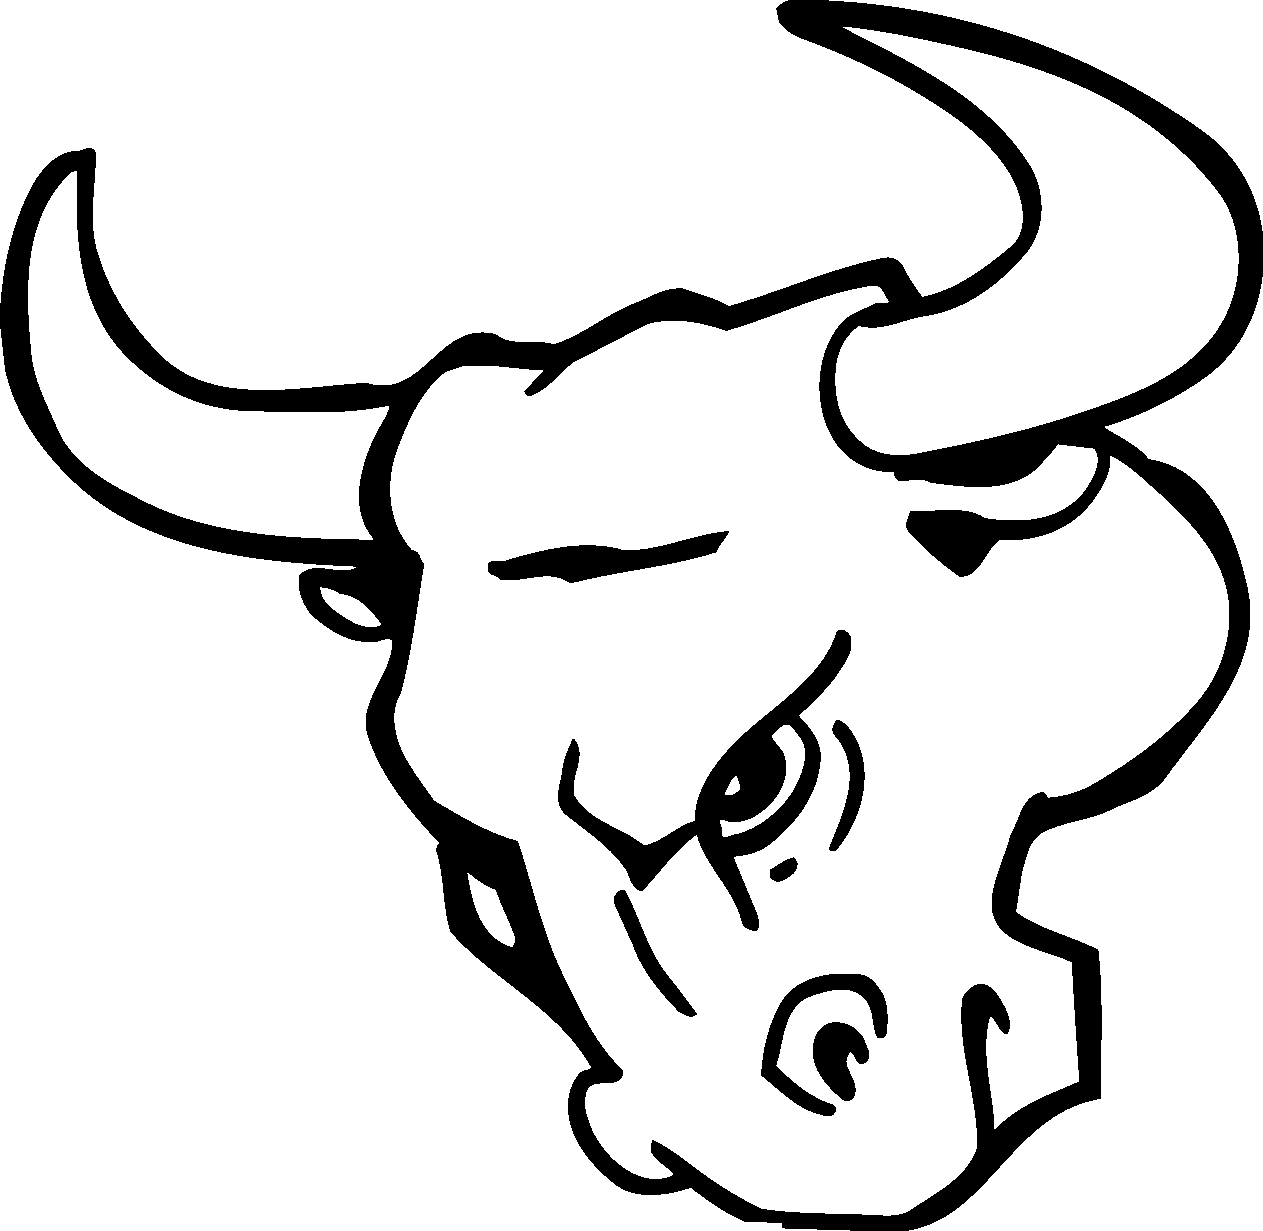 Bull Head Logo 